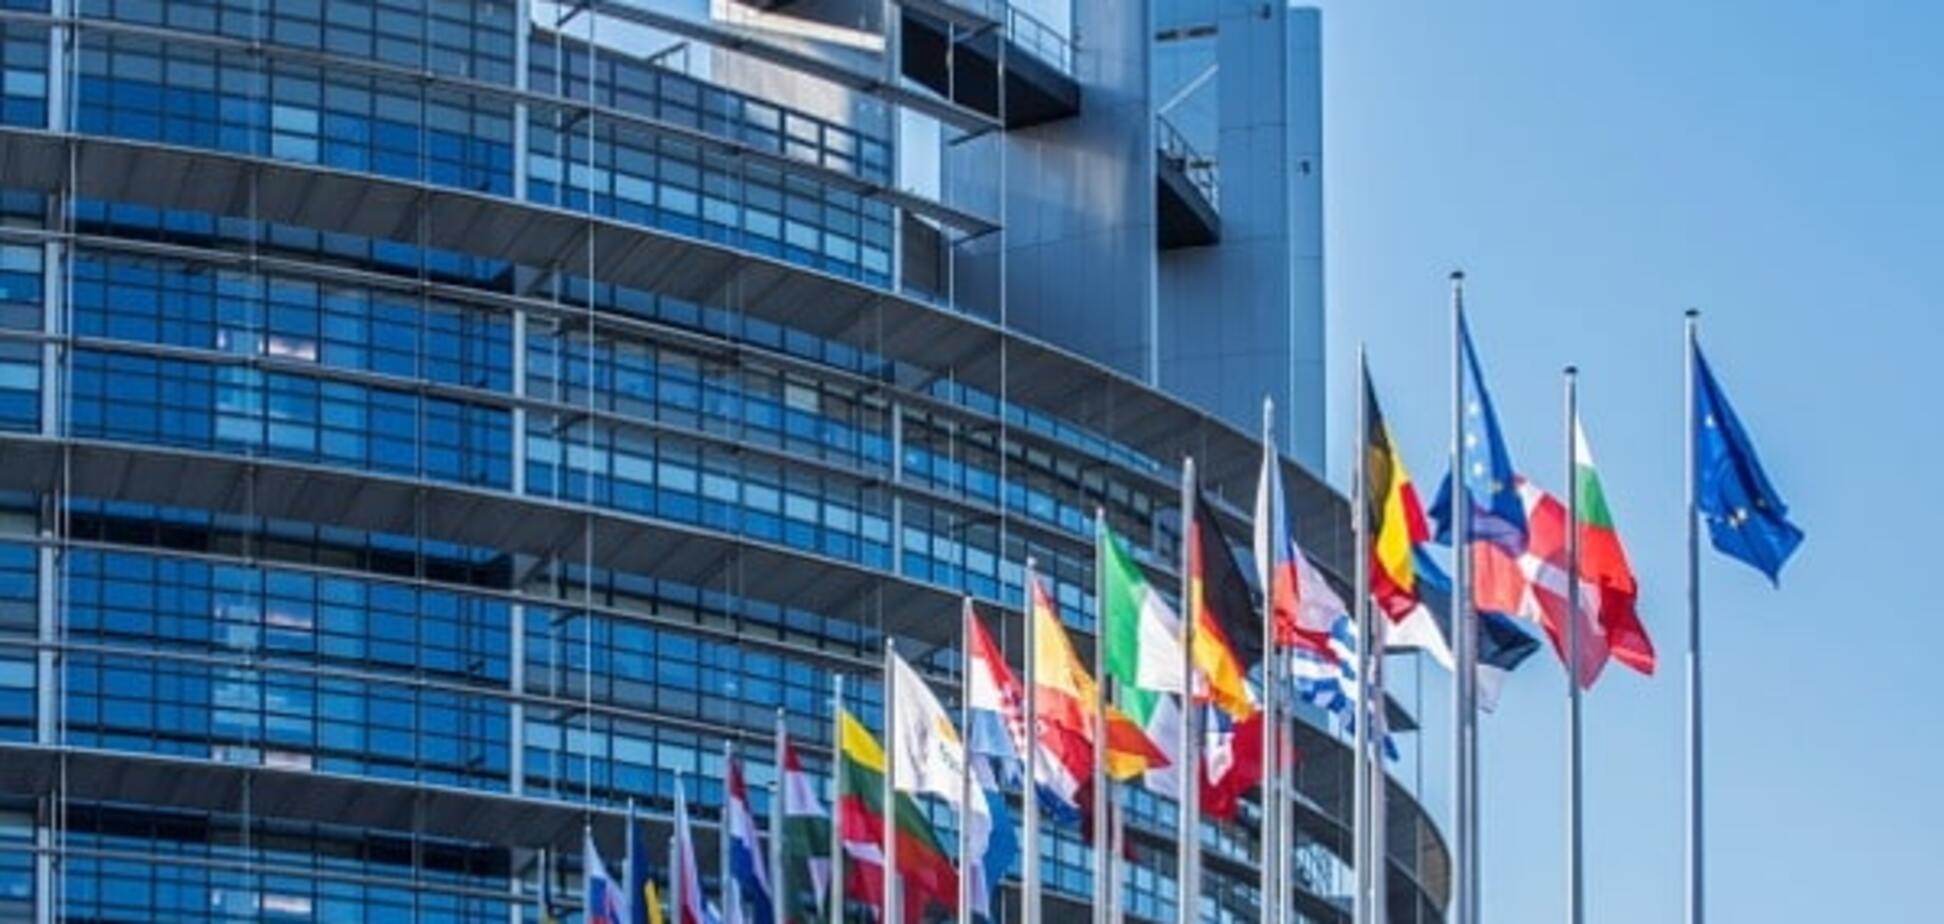 Здание Европейского парламента